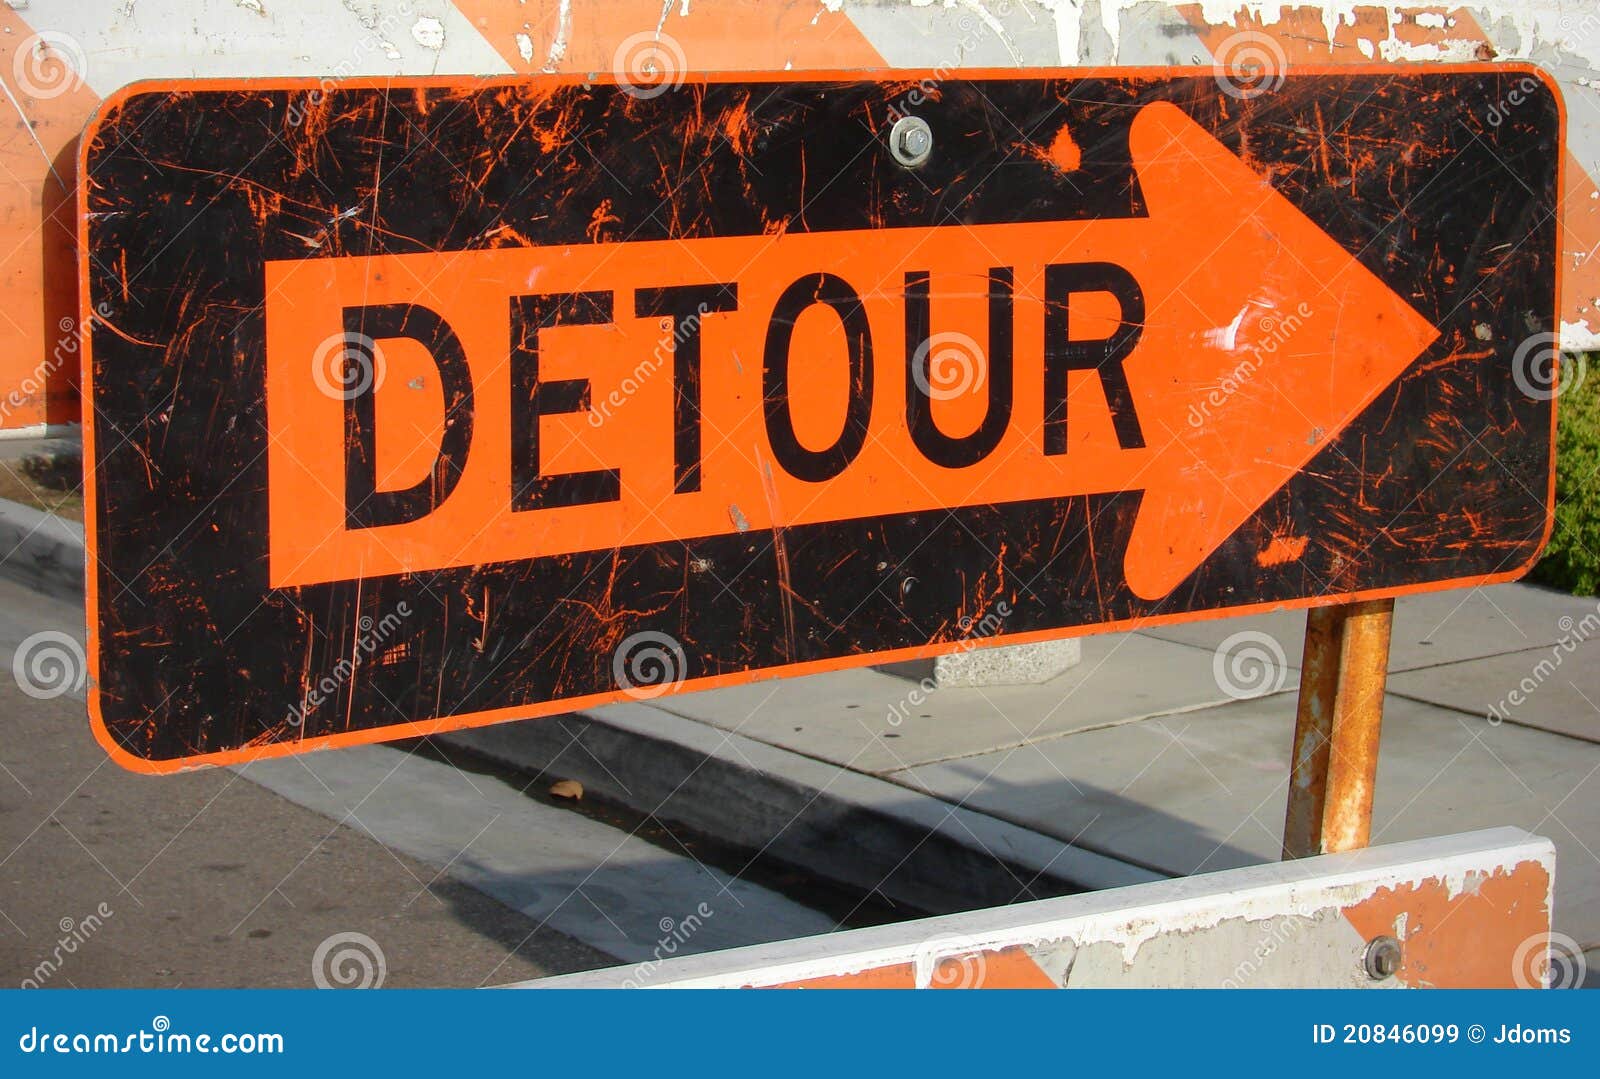 detour sign with arrow